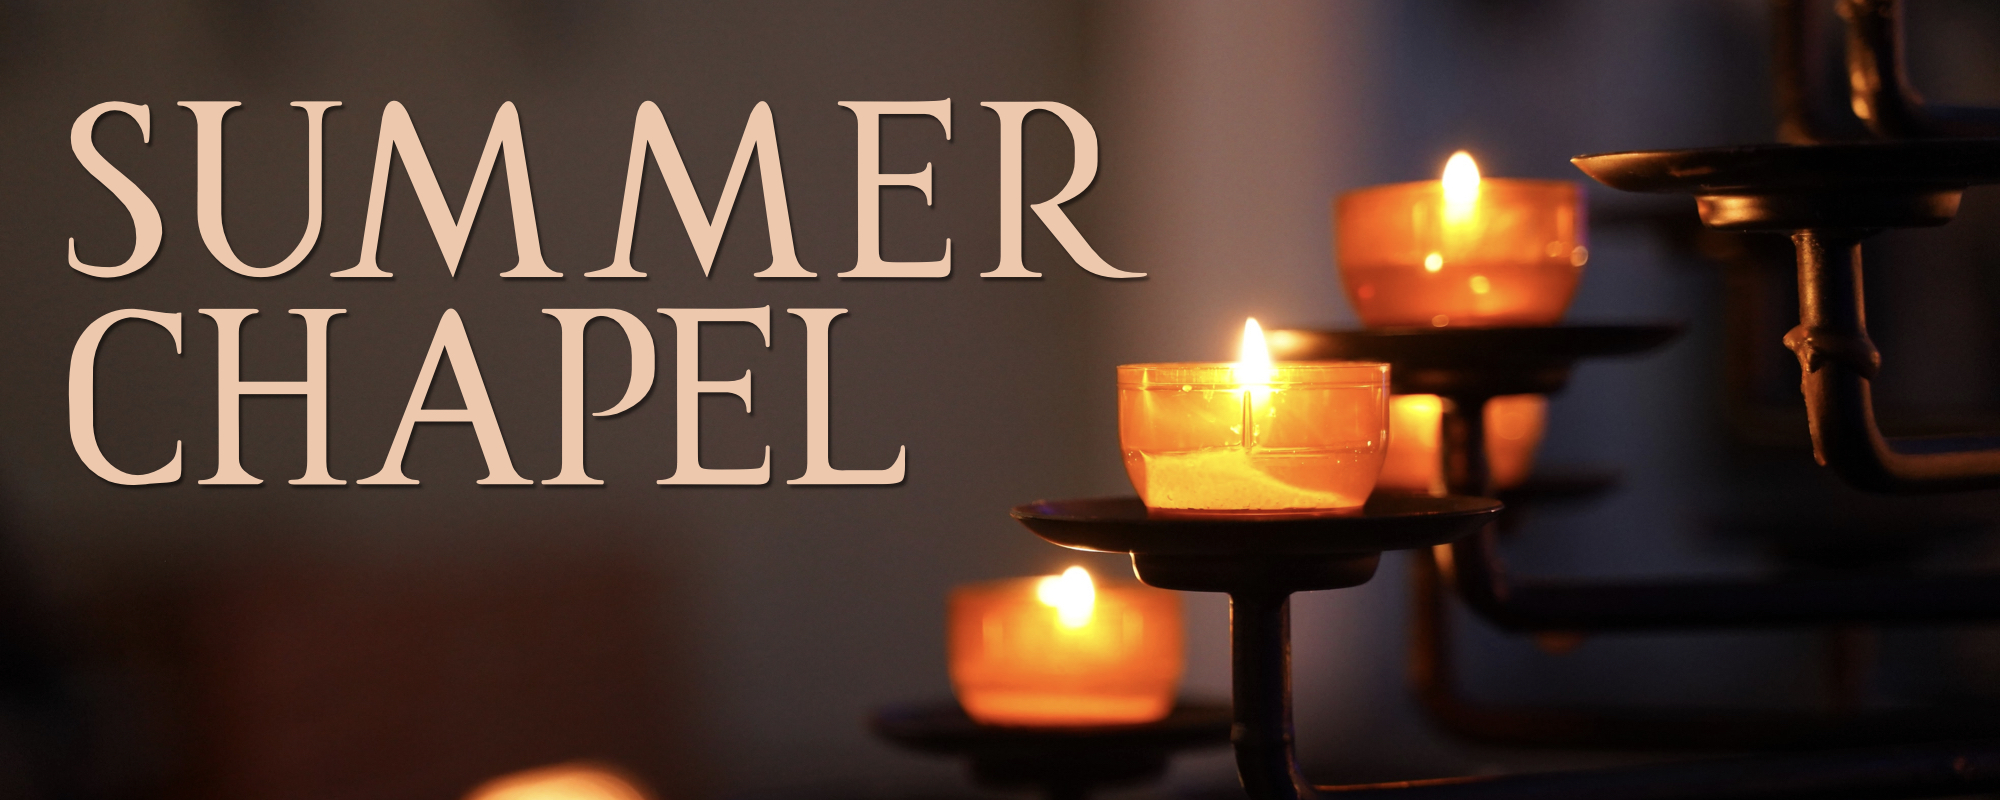 Summer Chapel Order of Worship June 4th